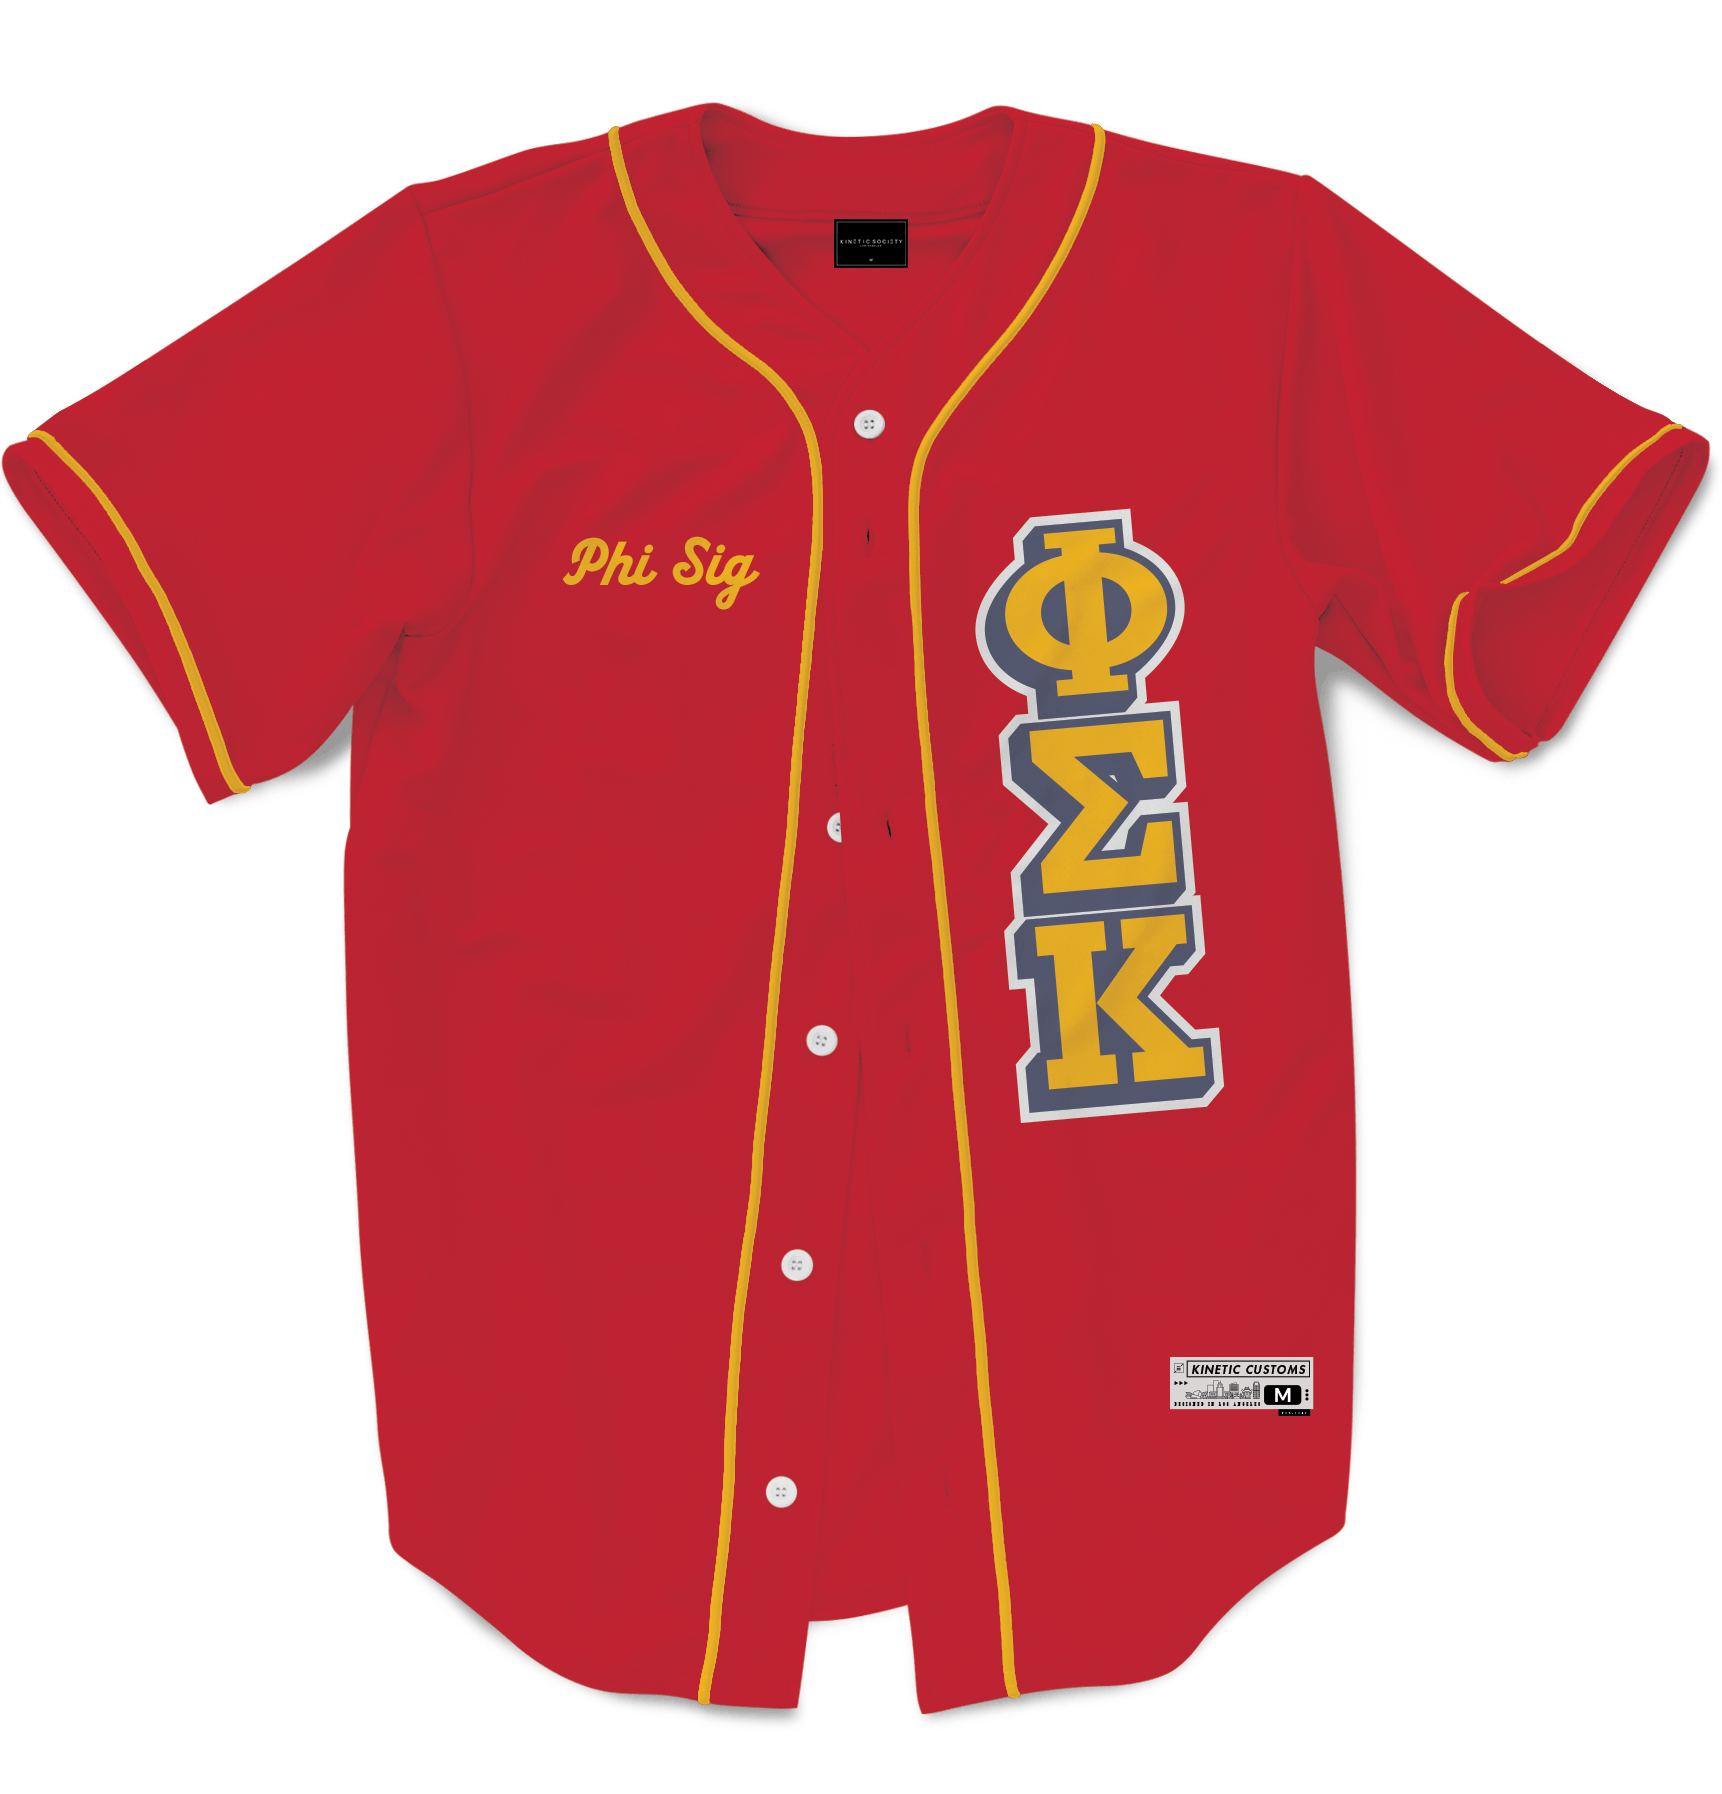 PHI SIGMA KAPPA - The Block Baseball Jersey Premium Baseball Kinetic Society LLC 